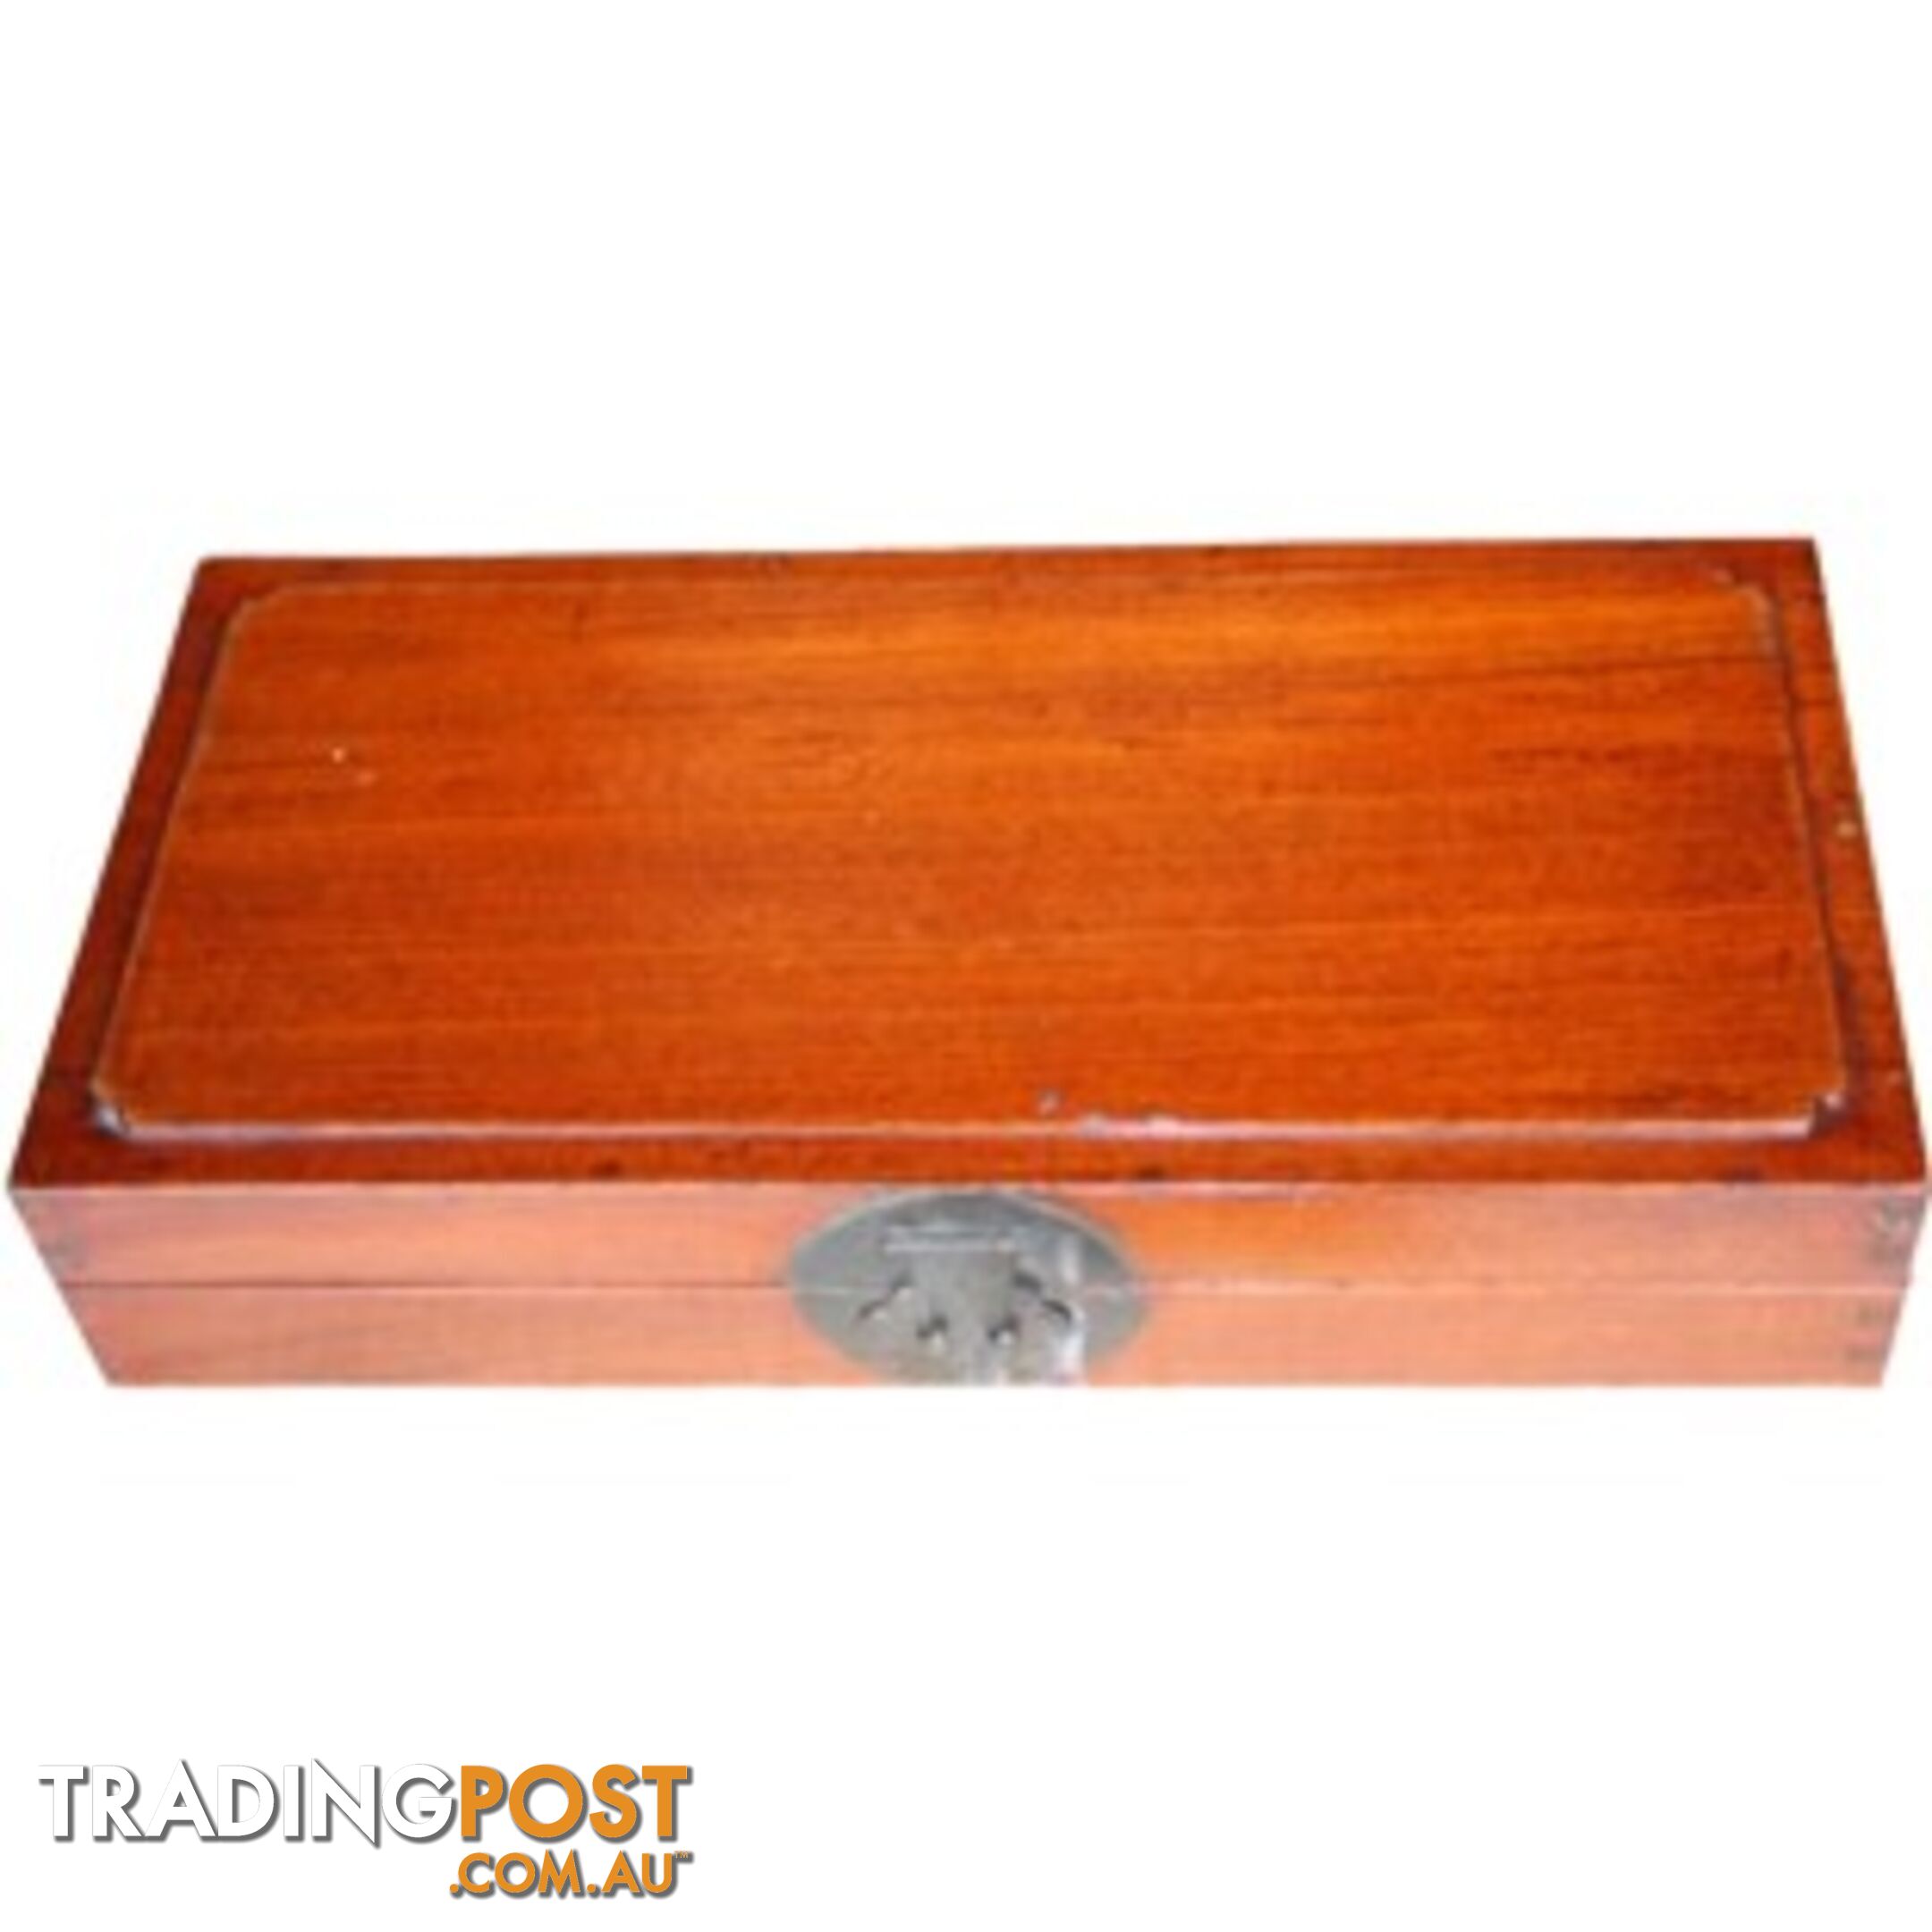 Brown Wood Document box